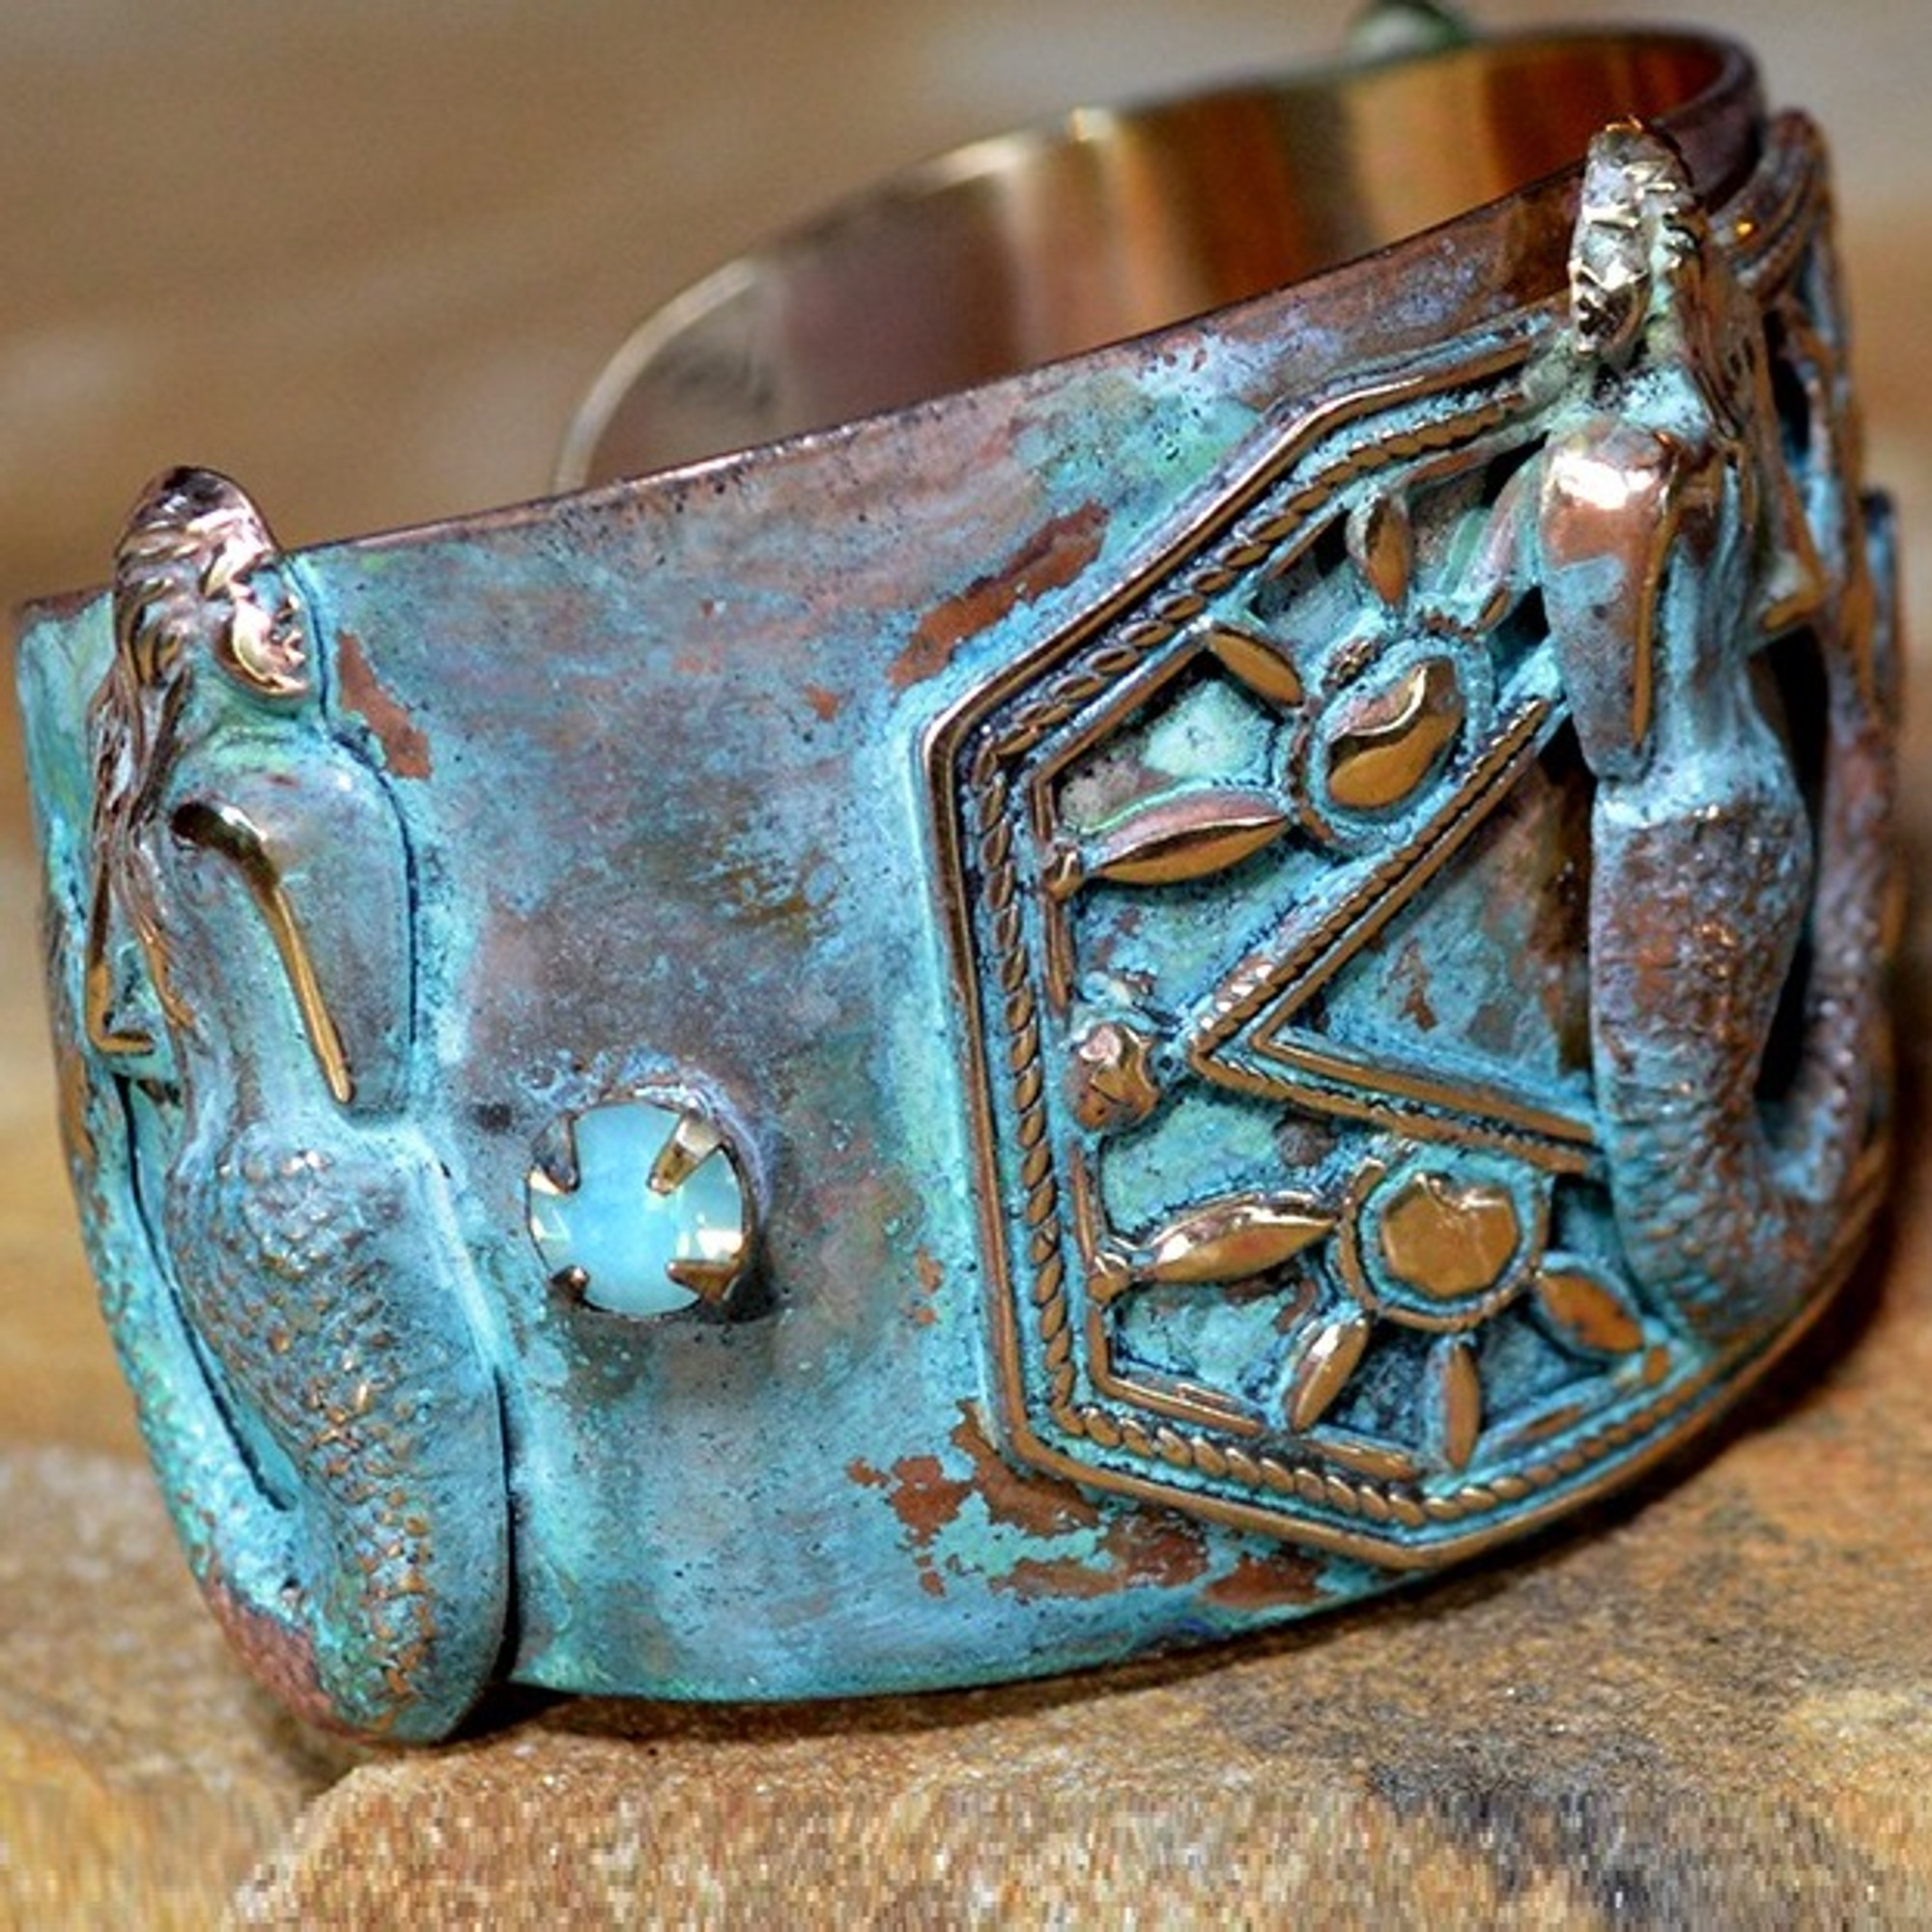 Mermaid Patina Brass Cuff Bracelet